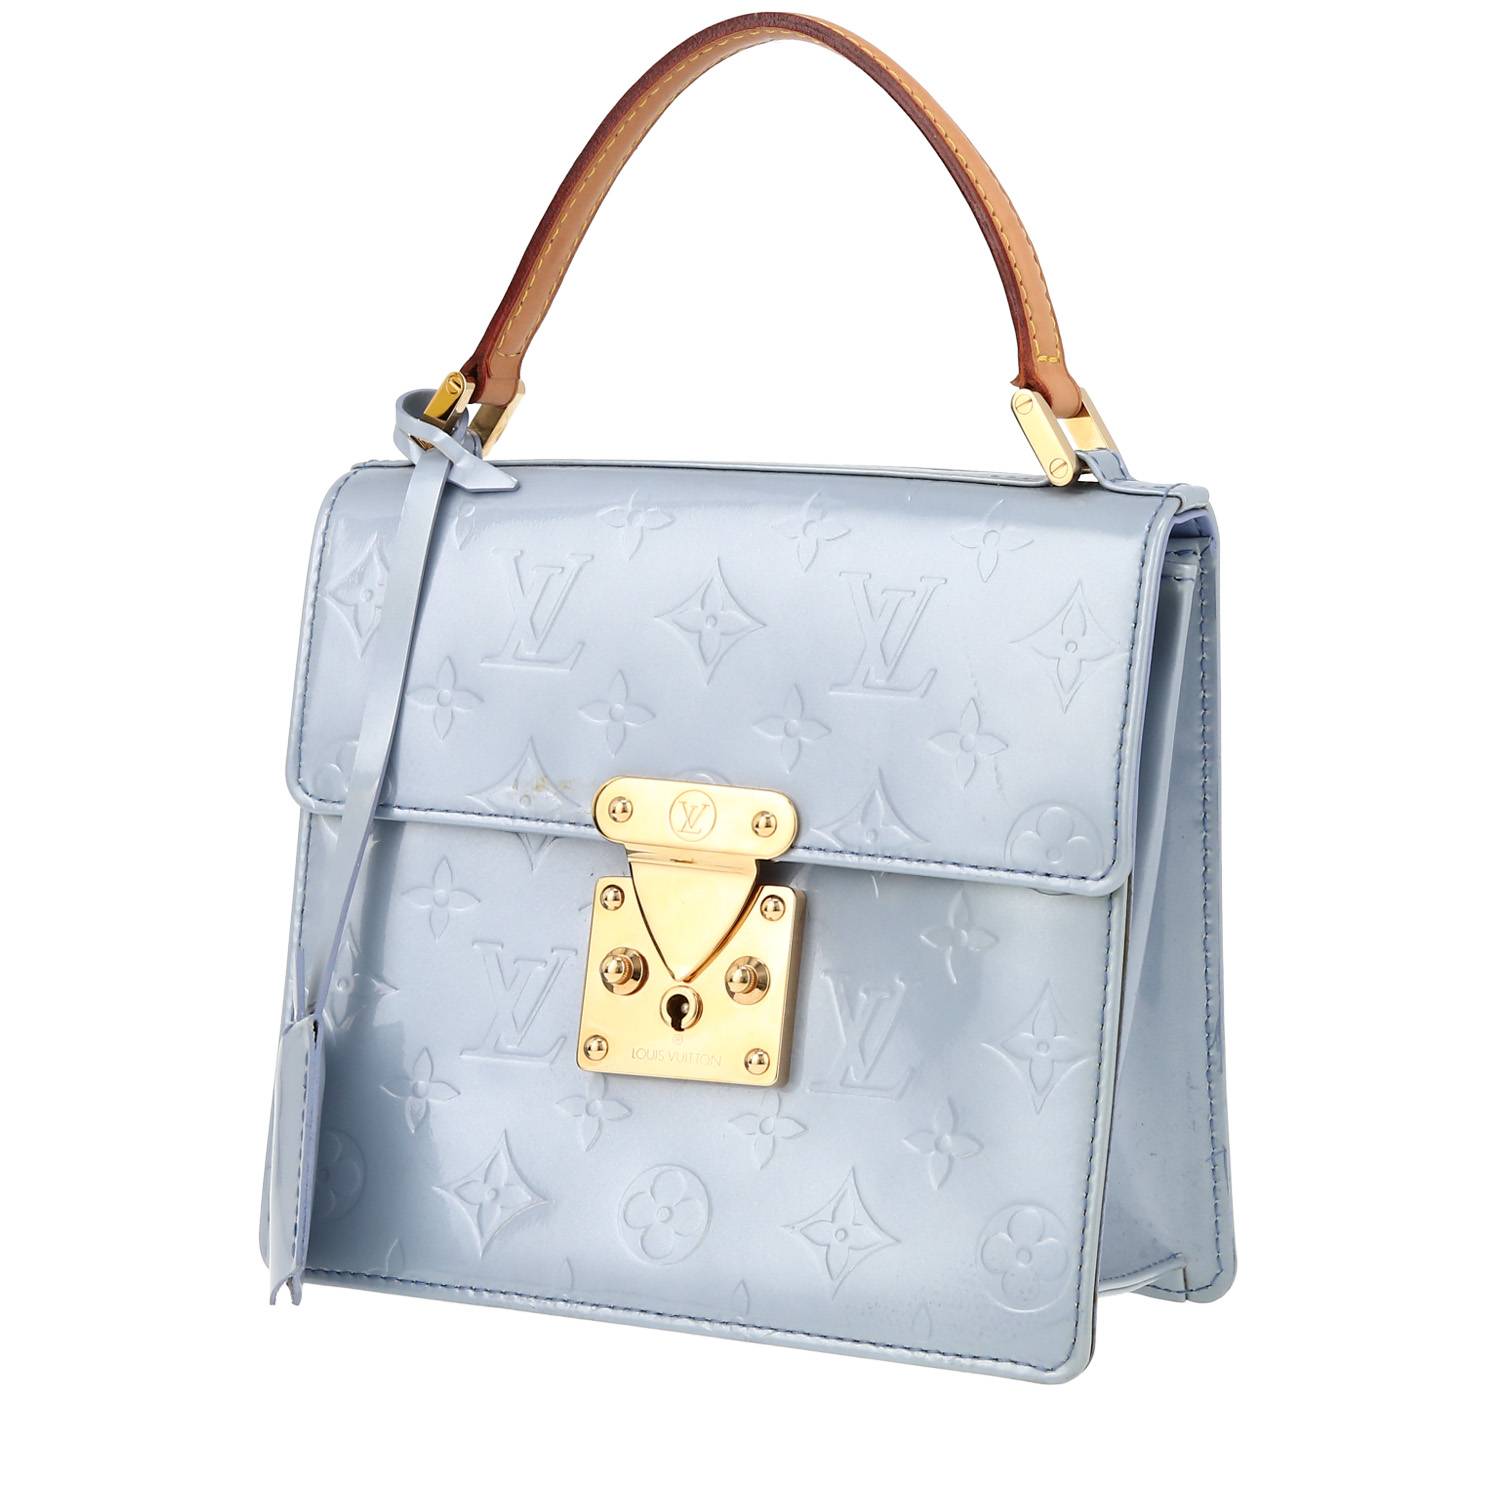 louis vuitton blue and white handbag